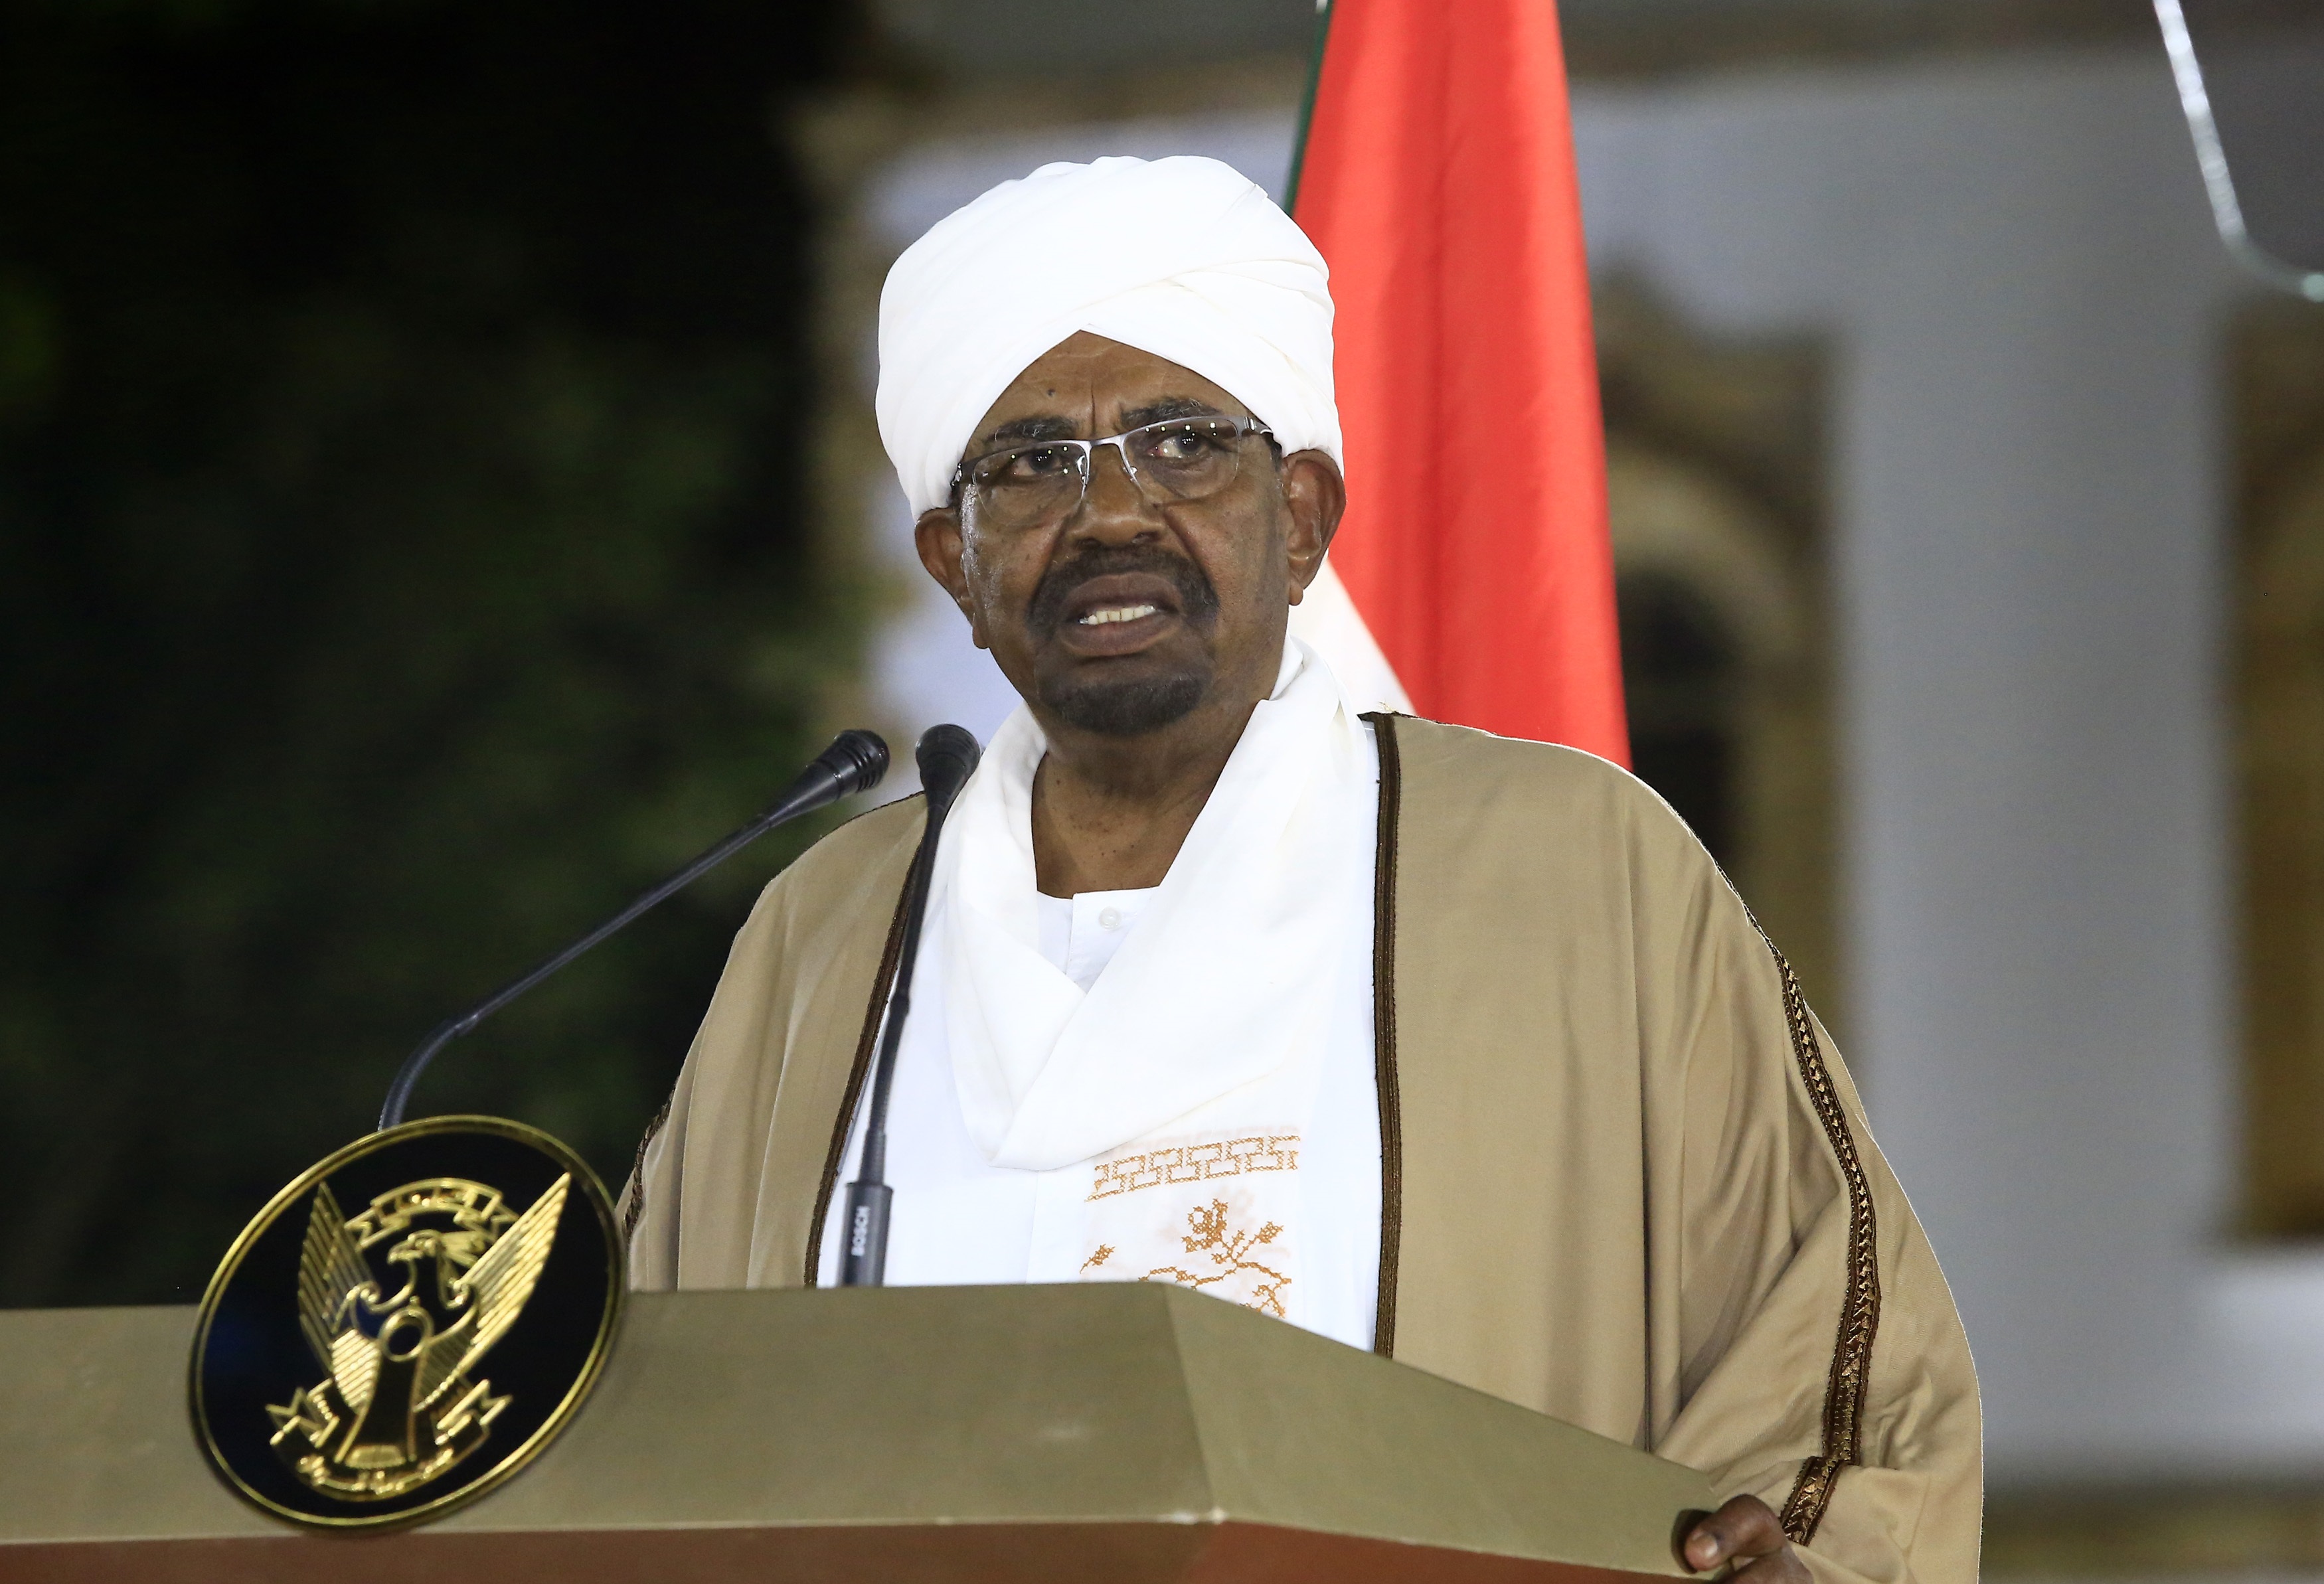 El ex presidente de Sudán Omar Hasán al-Bashir (Mohamed Khidir / ZUMA PRESS)